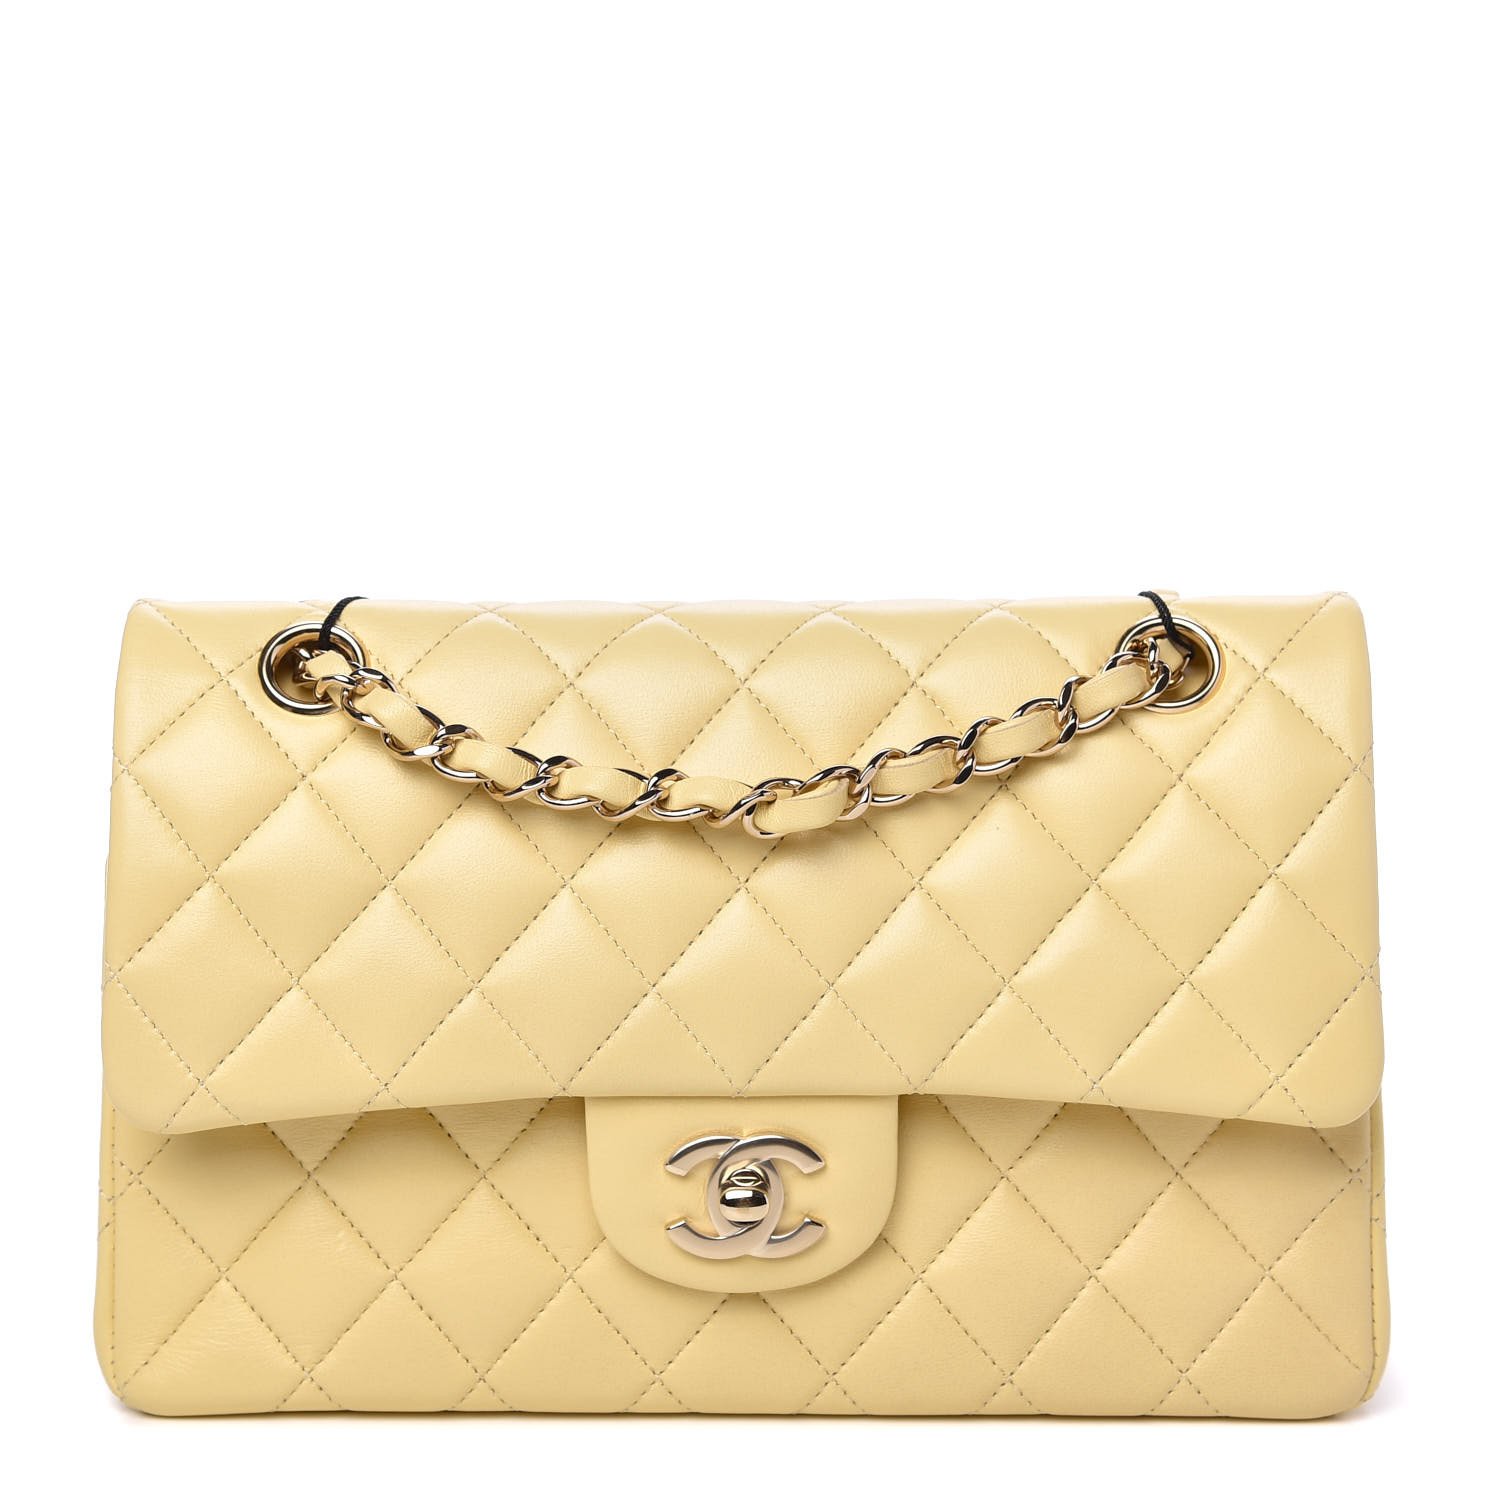 Chanel-Vuitton, Sale n°2140, Lot n°113